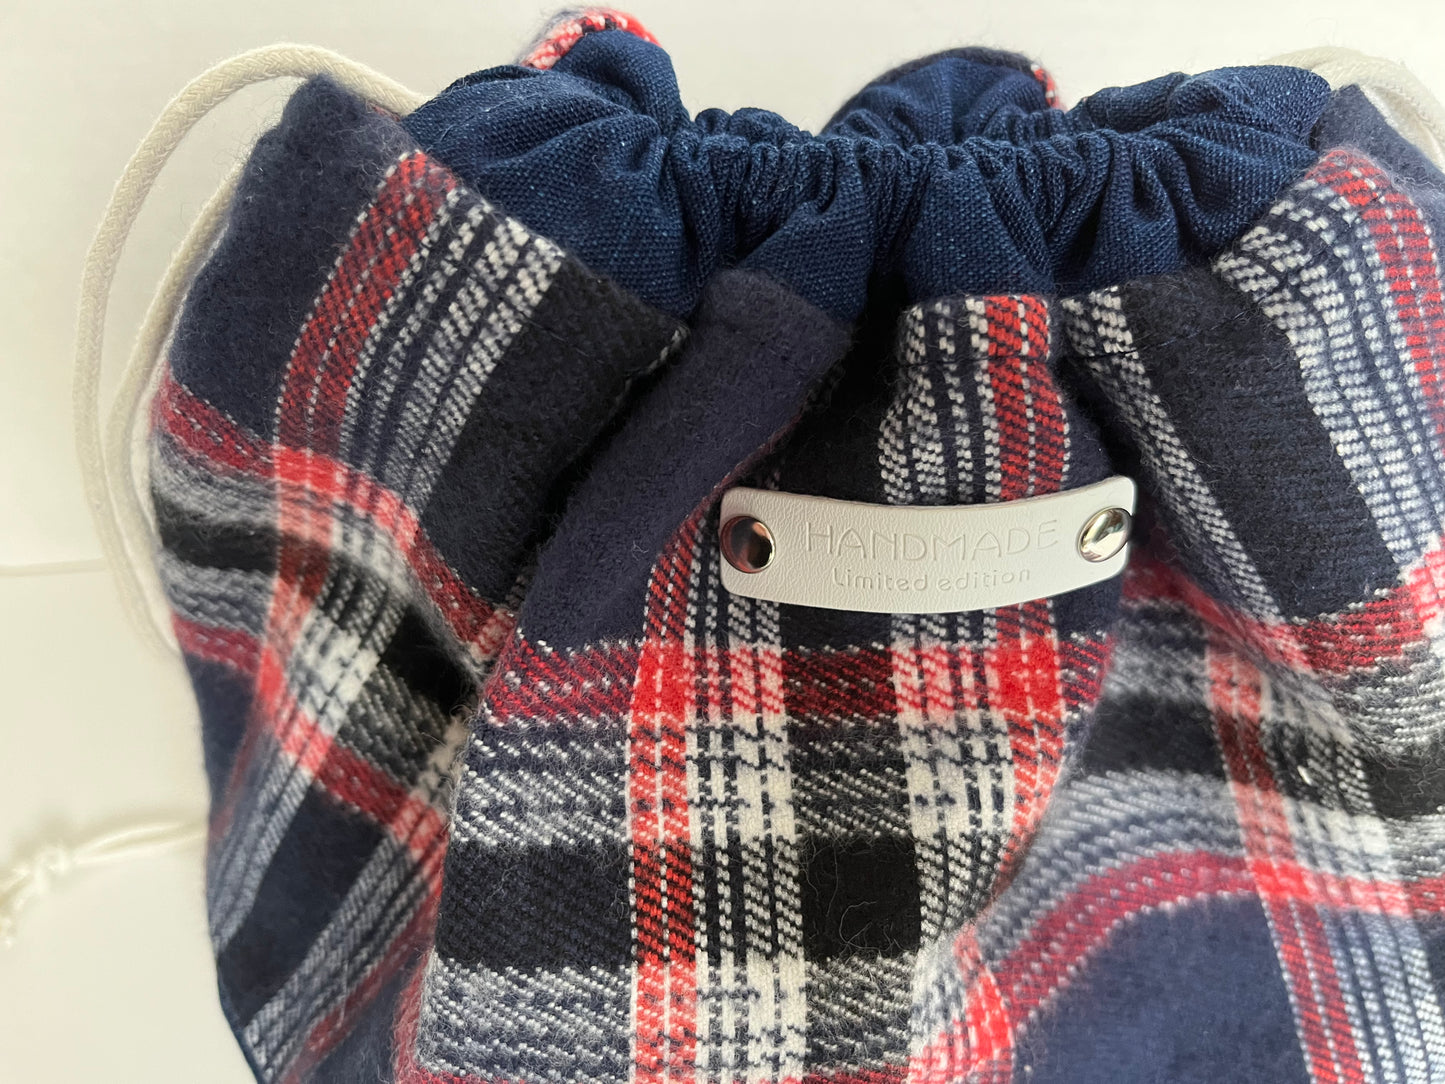 Plaid Flannel Small Knitting Bag, Fall Project Bag, Finch Bucket Bag